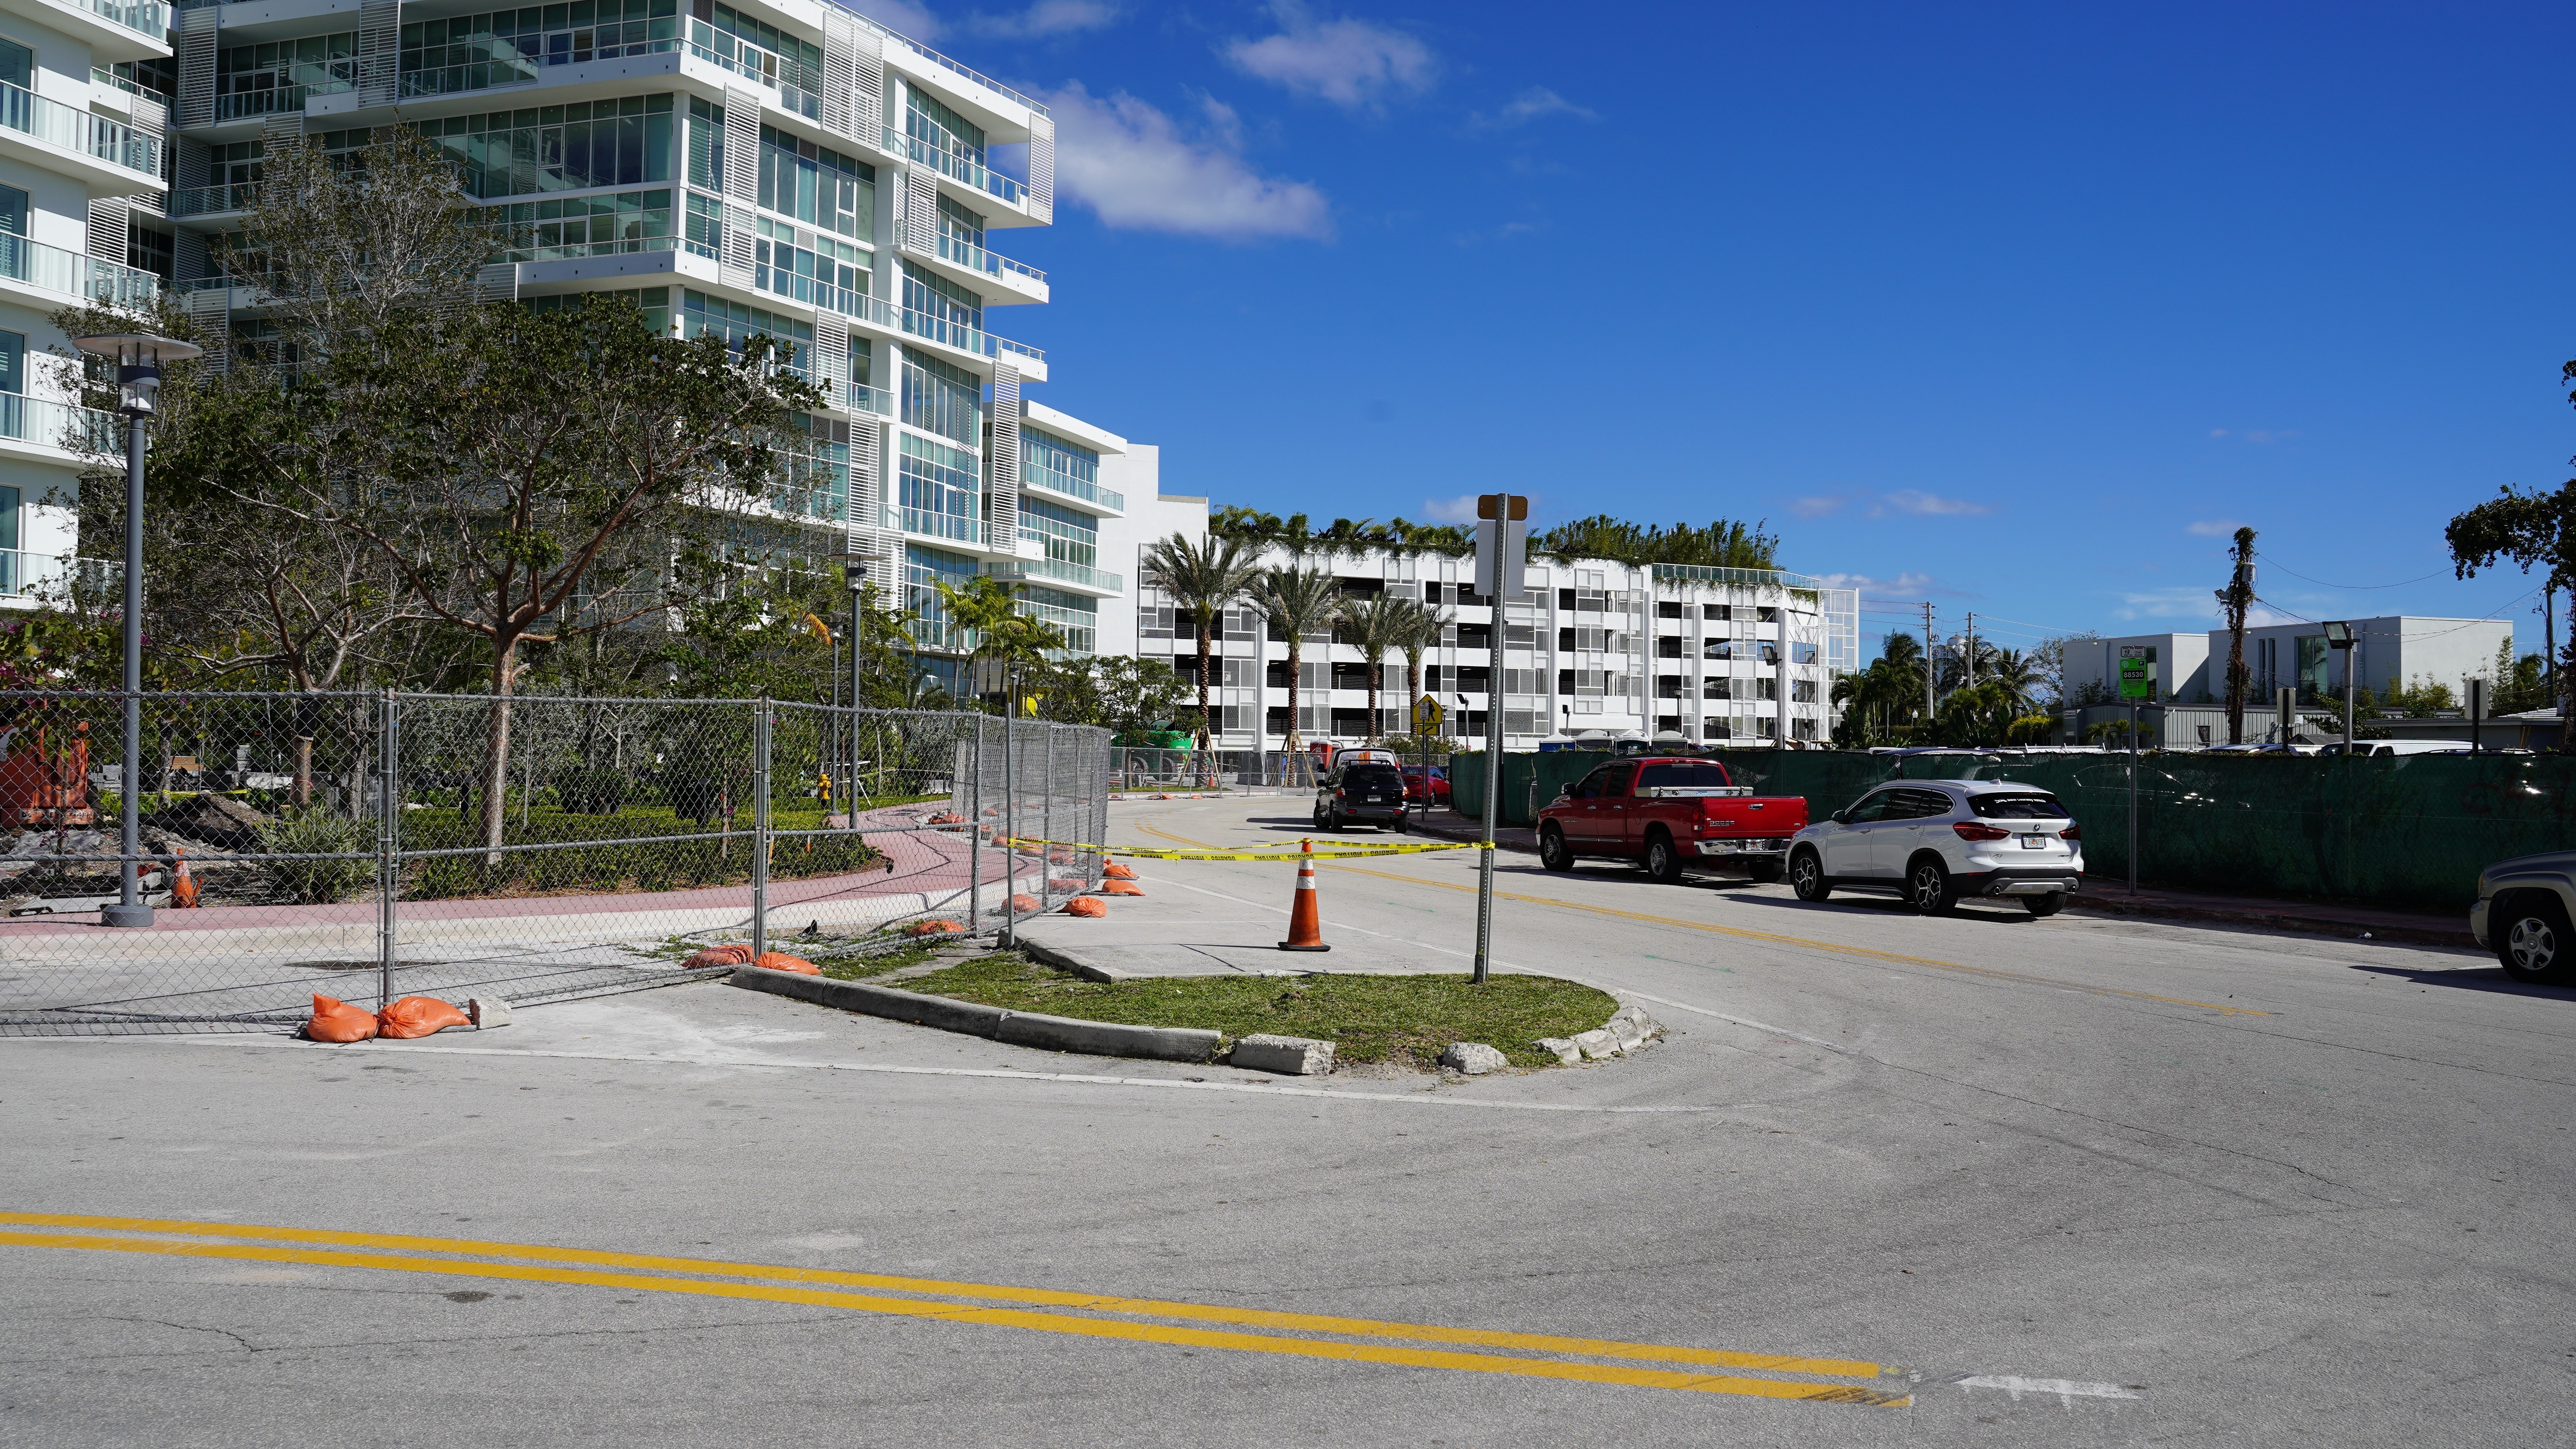 1. Ritz Carlton Miami Beach building at 4701 N Meridian Ave, Nautilus, Miami Beach, FL 33140